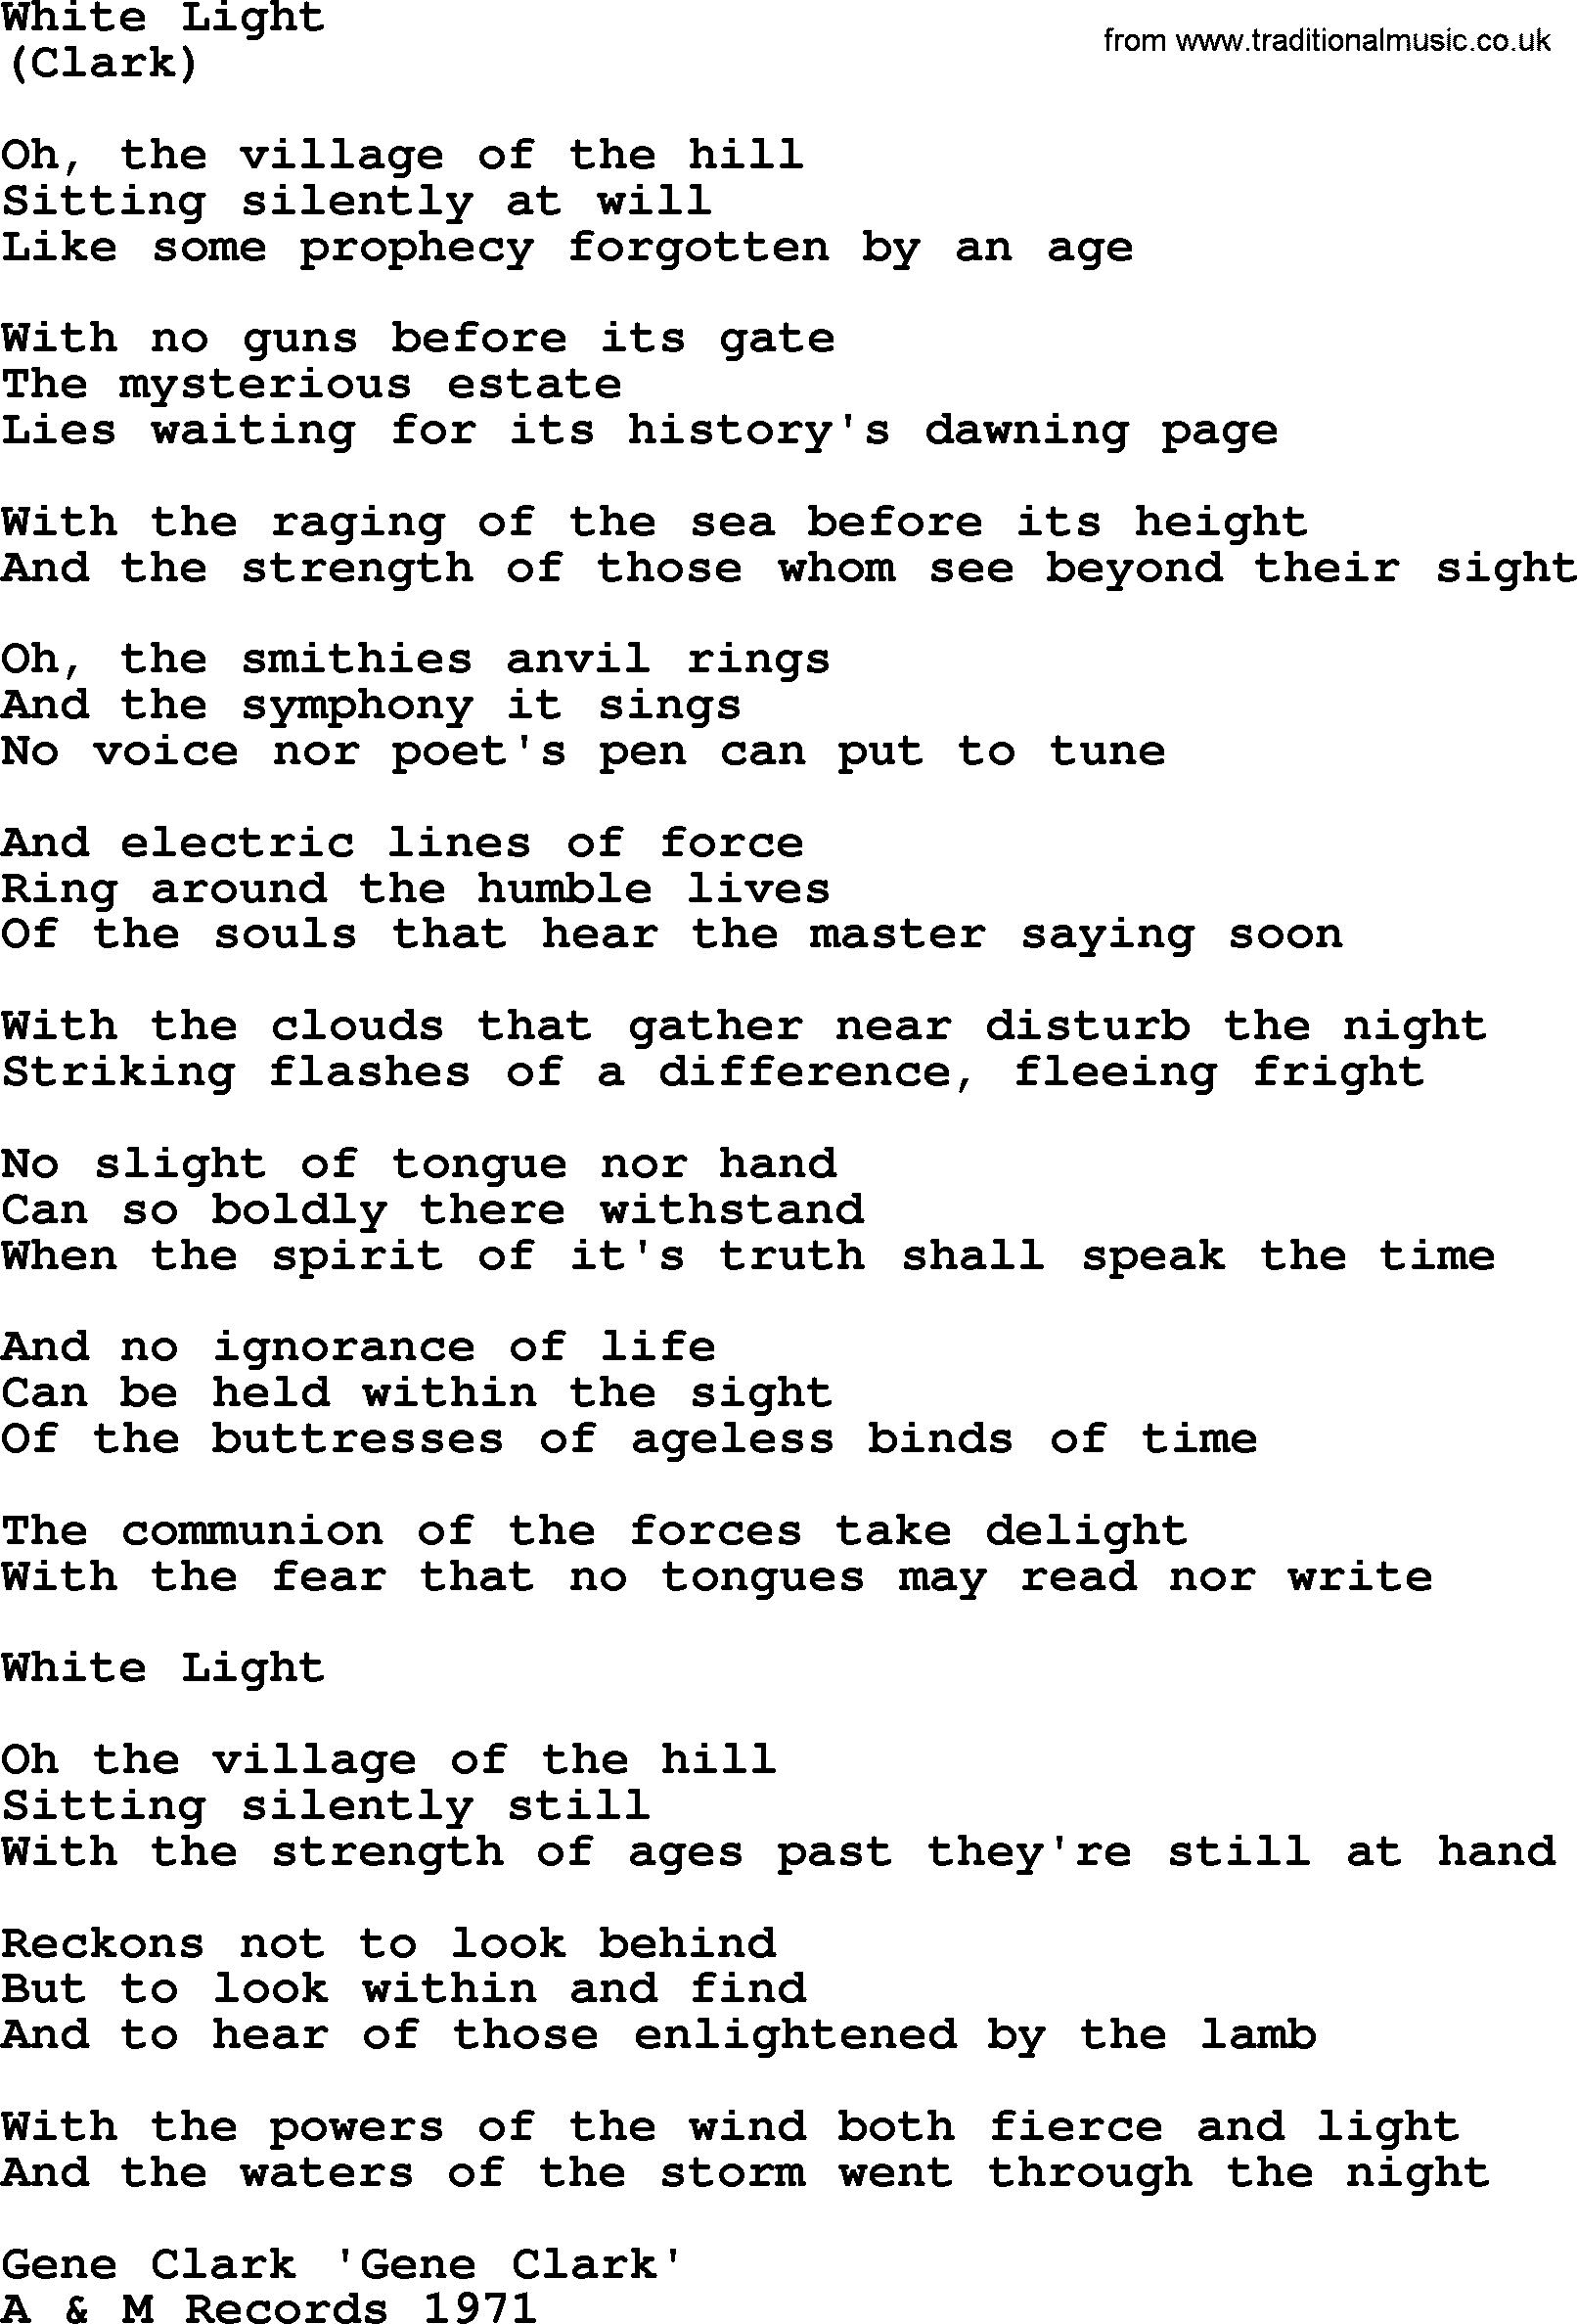 The Byrds song White Light, lyrics